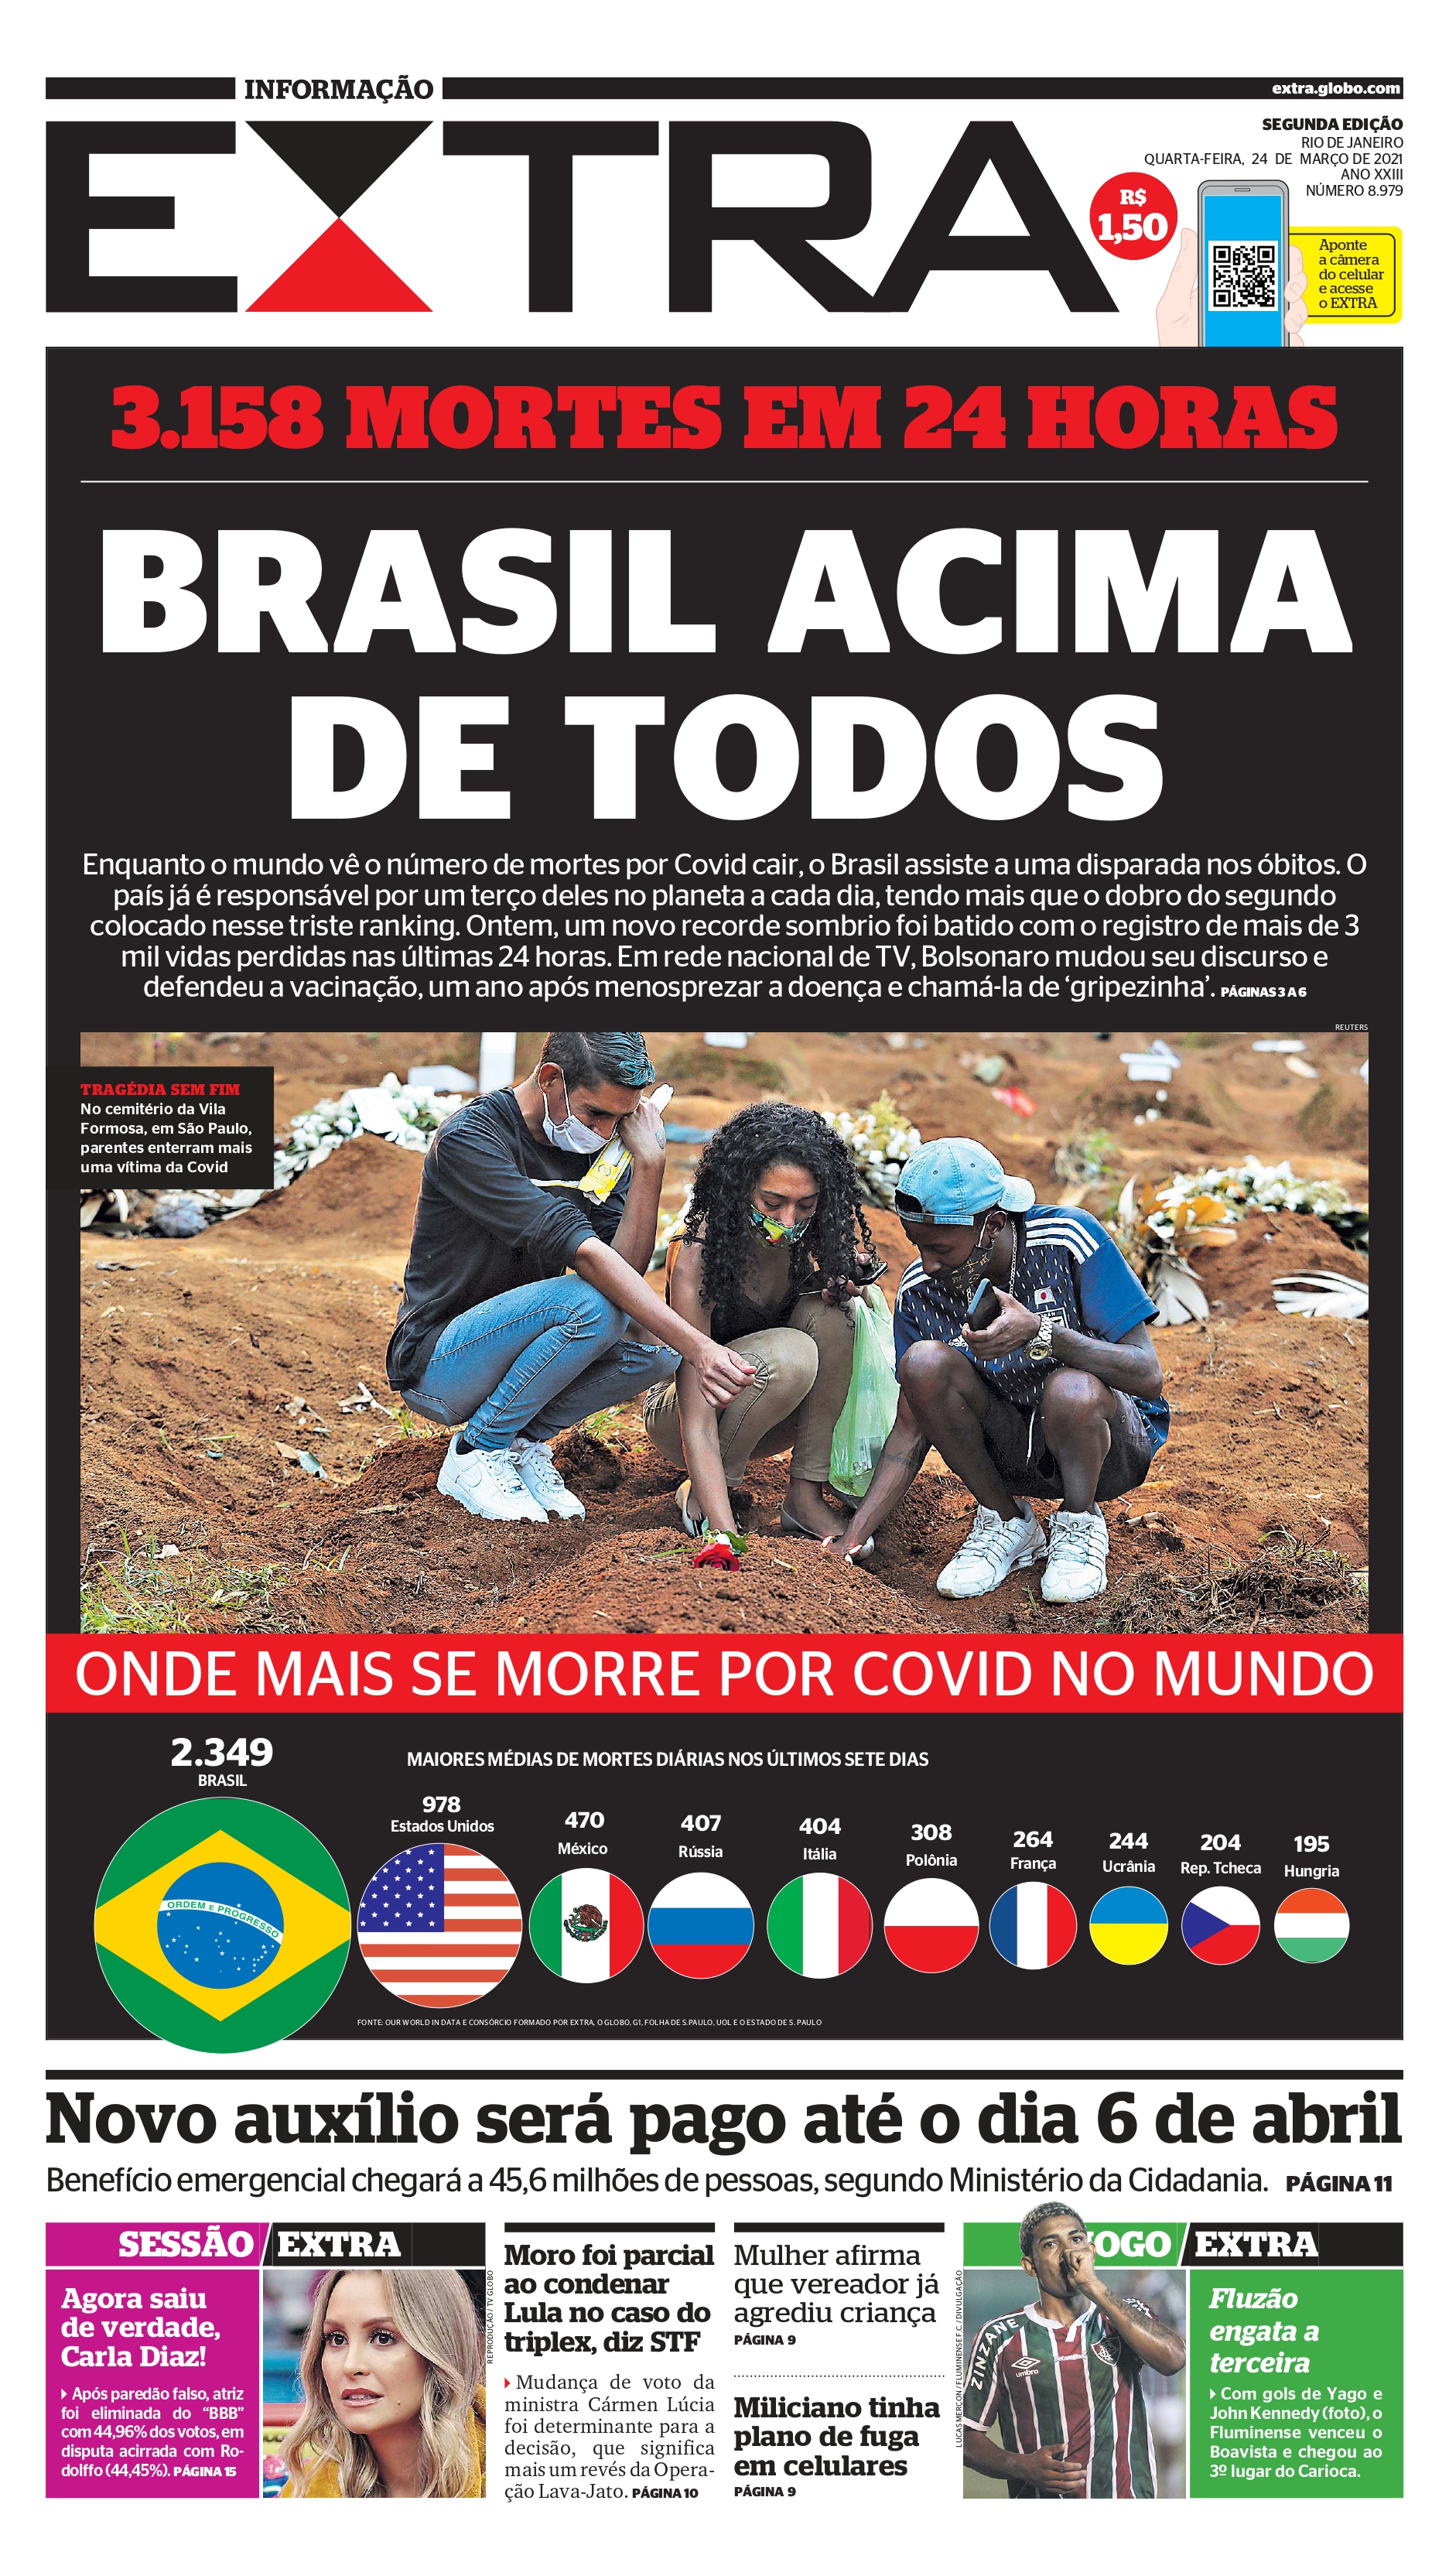 Capa do Jornal Extra de hoje - 11/09/2021 : r/brasil